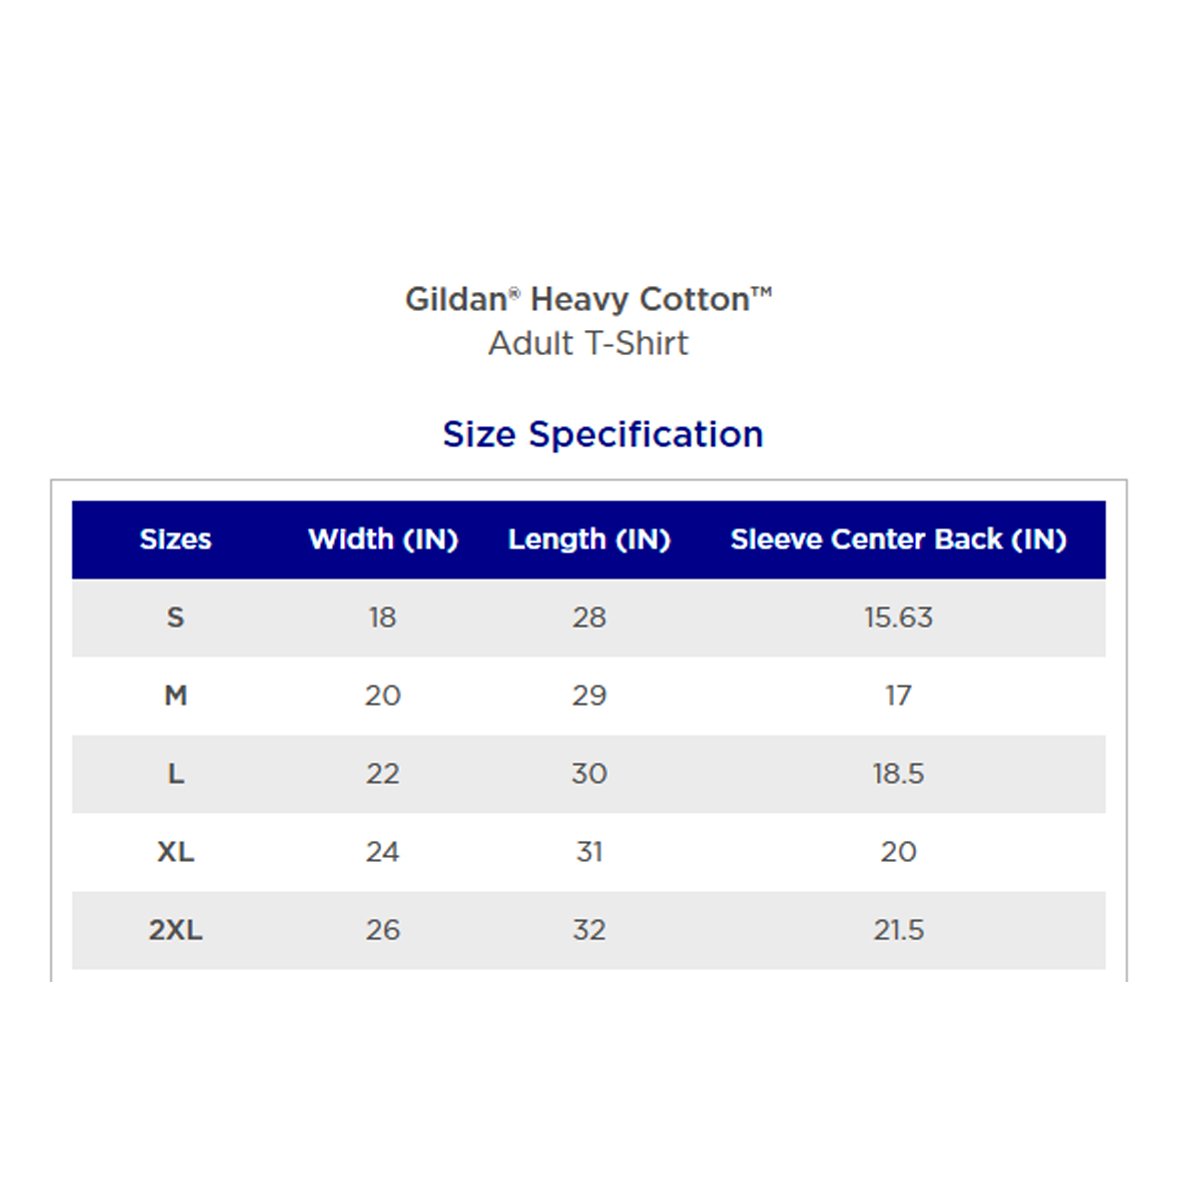 Gildan Ultra Cotton Long Sleeve Size Chart